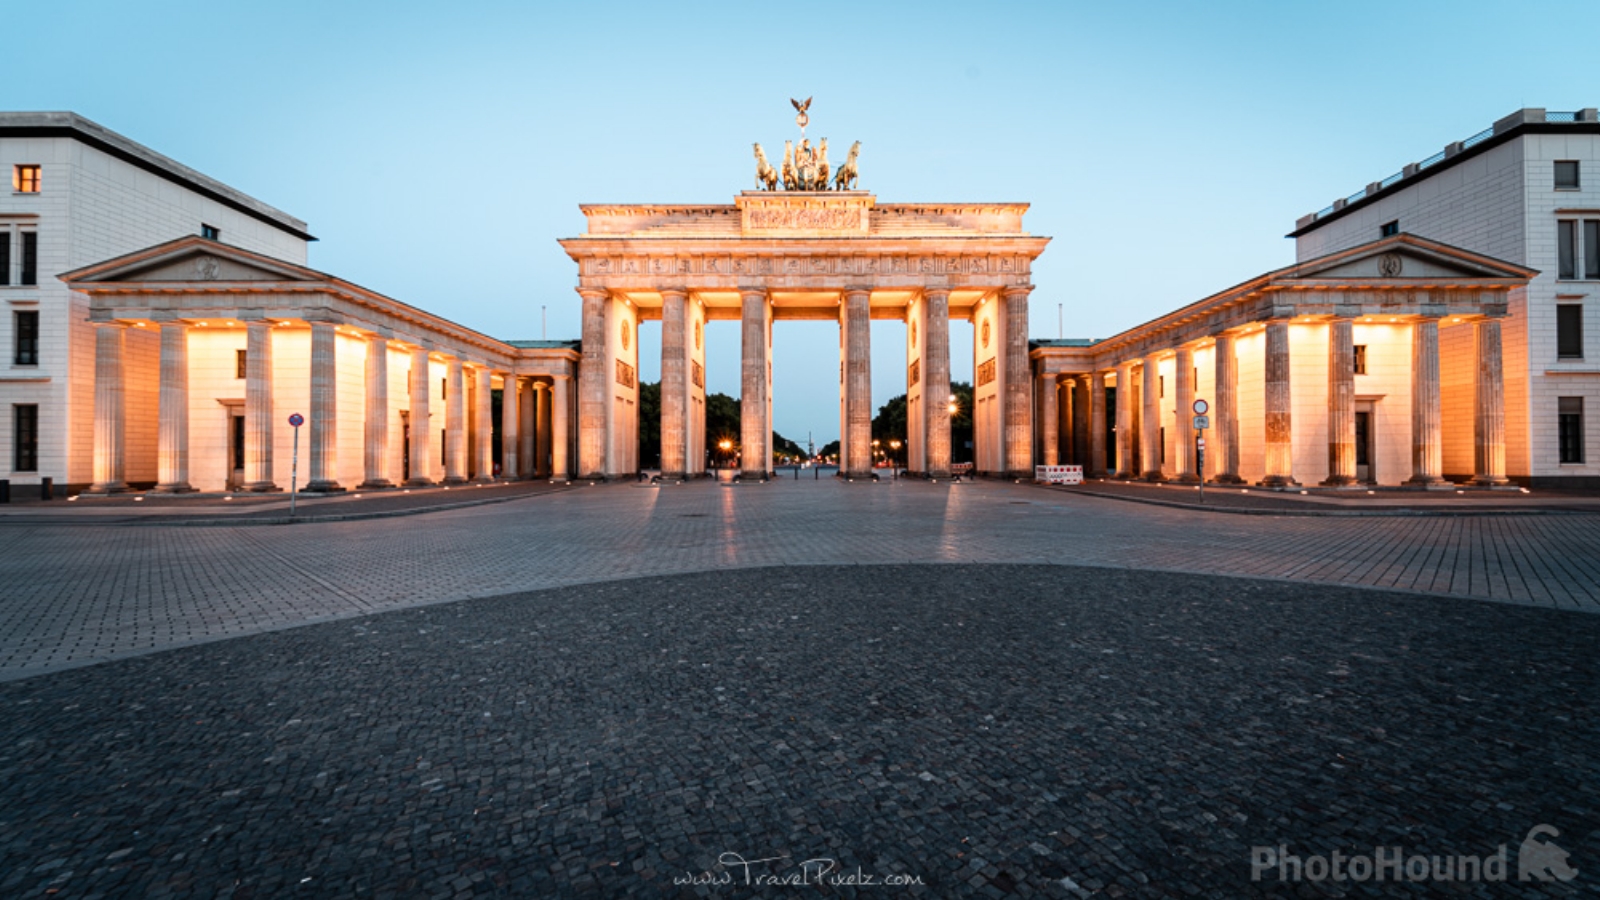 Image of Brandenburg Gate by Fabian Pfitzinger